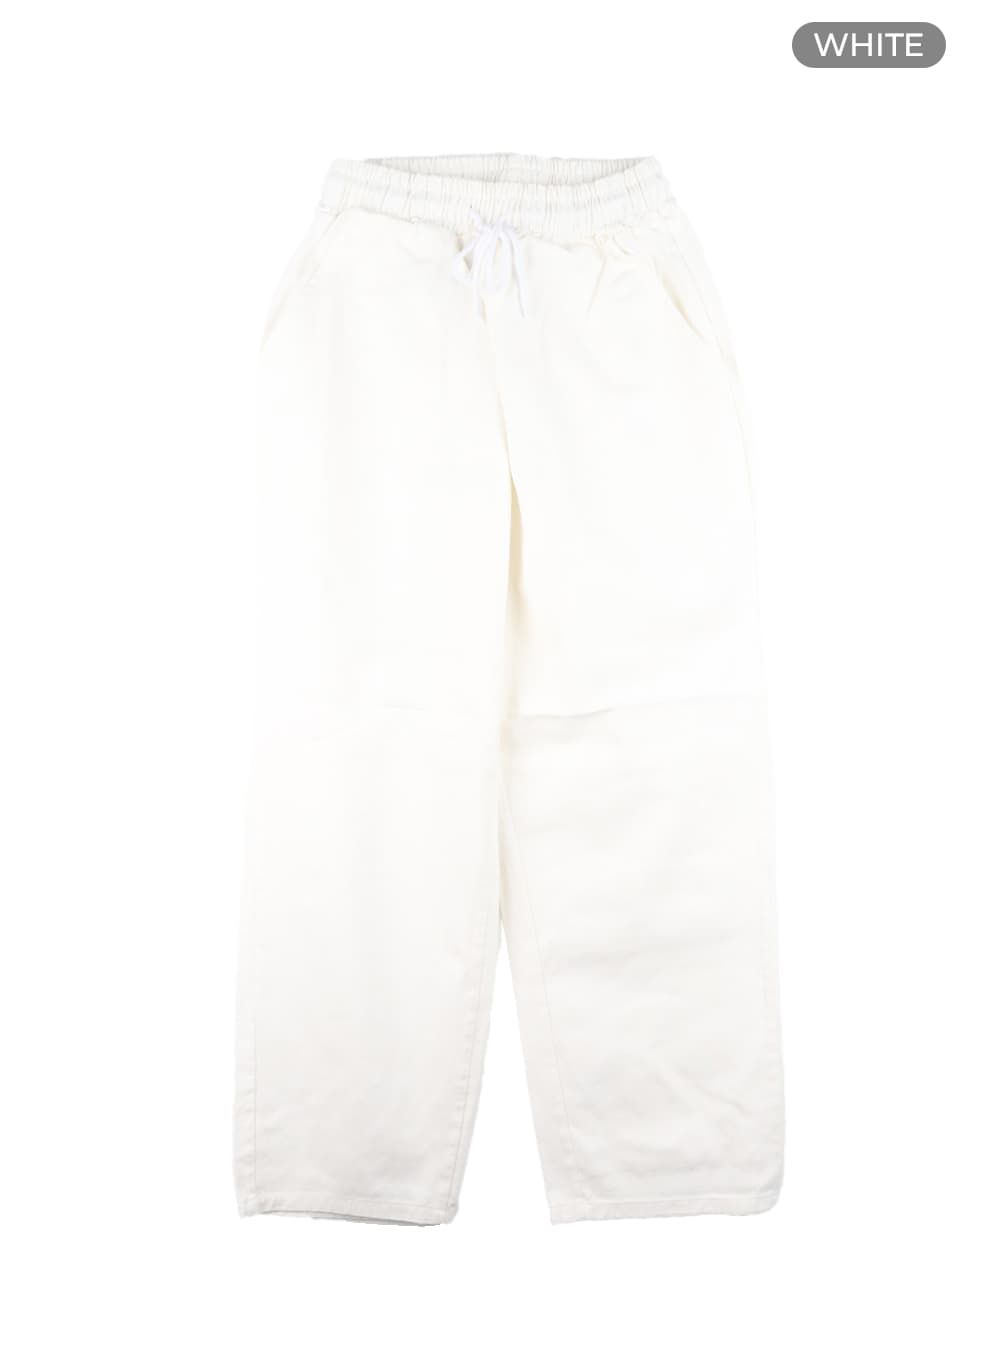 mens-wide-leg-cotton-pants-ia402 / White